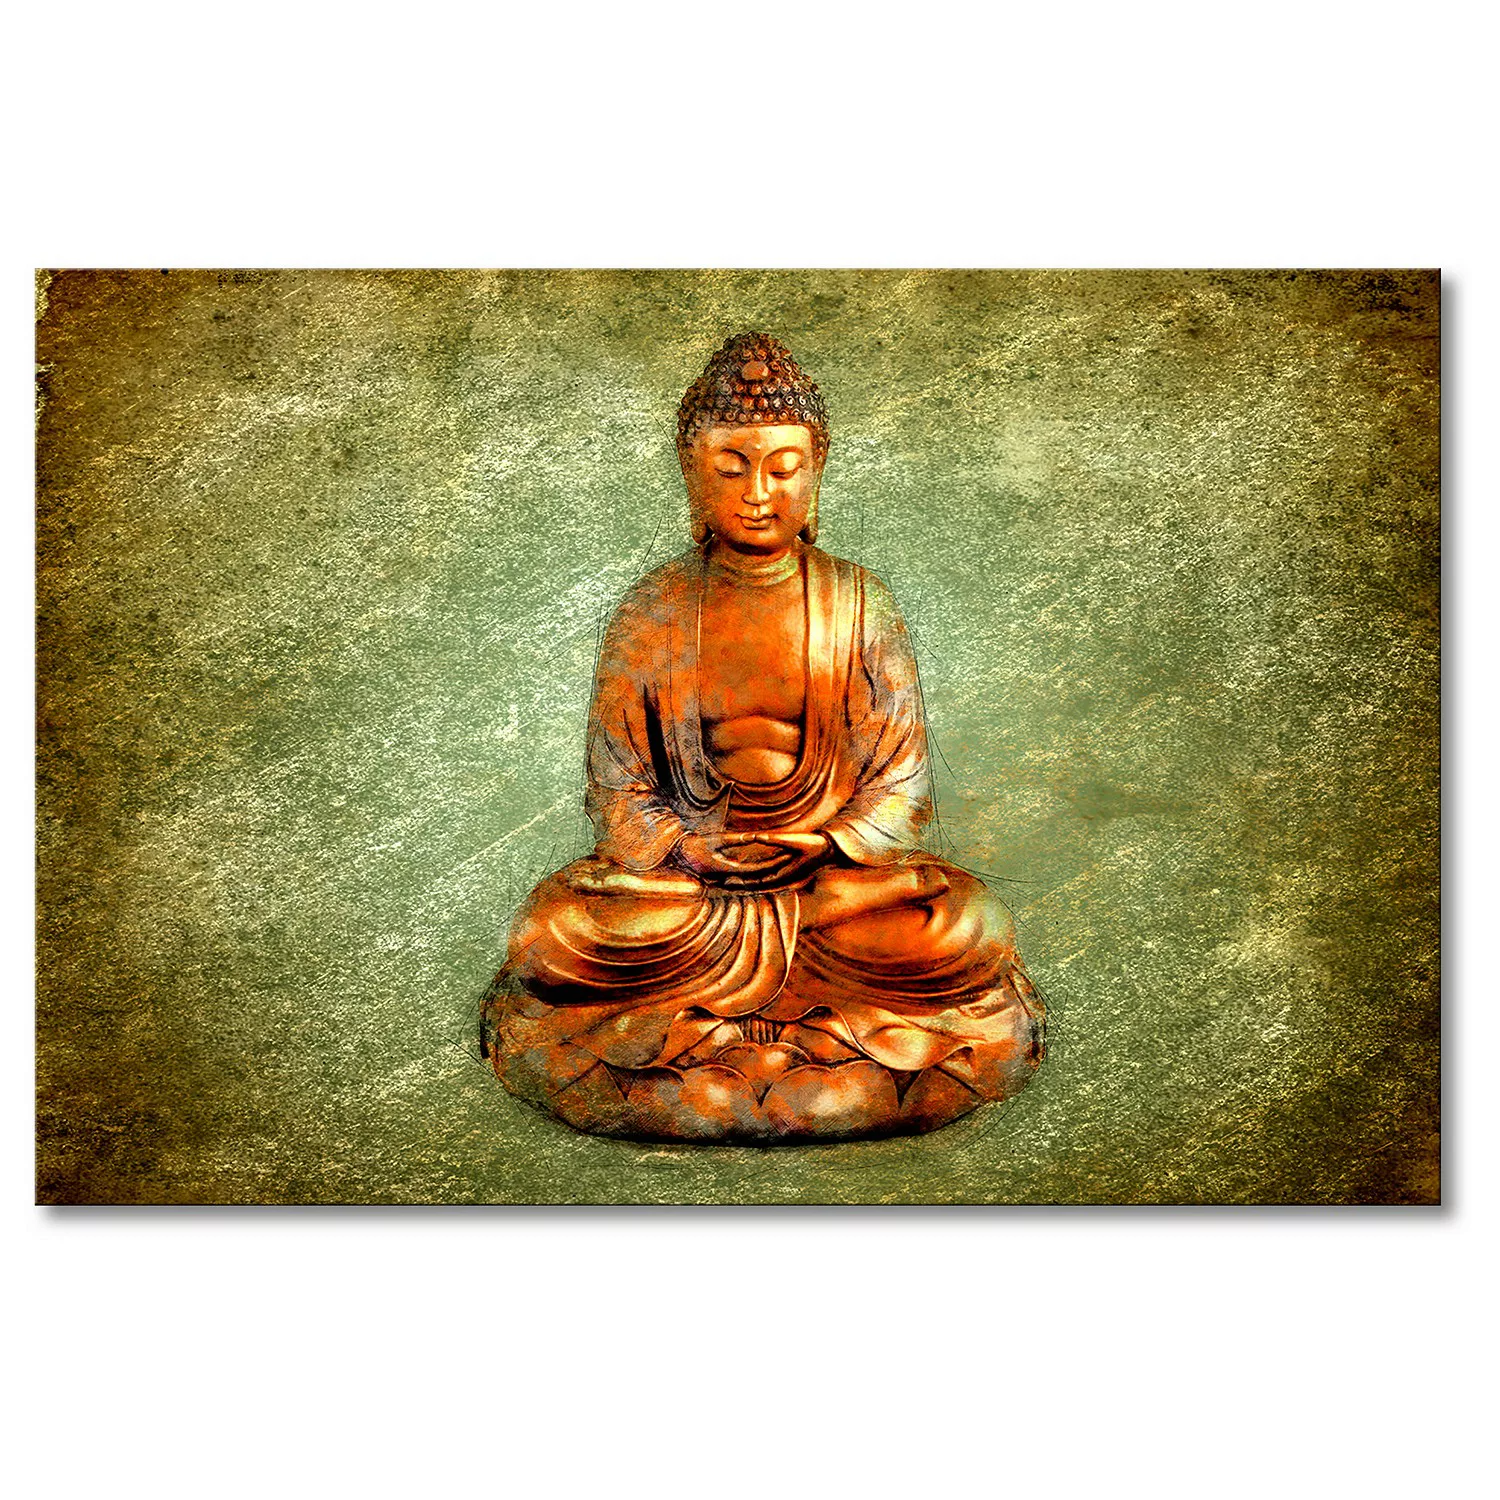 home24 Wandbild Meditation günstig online kaufen